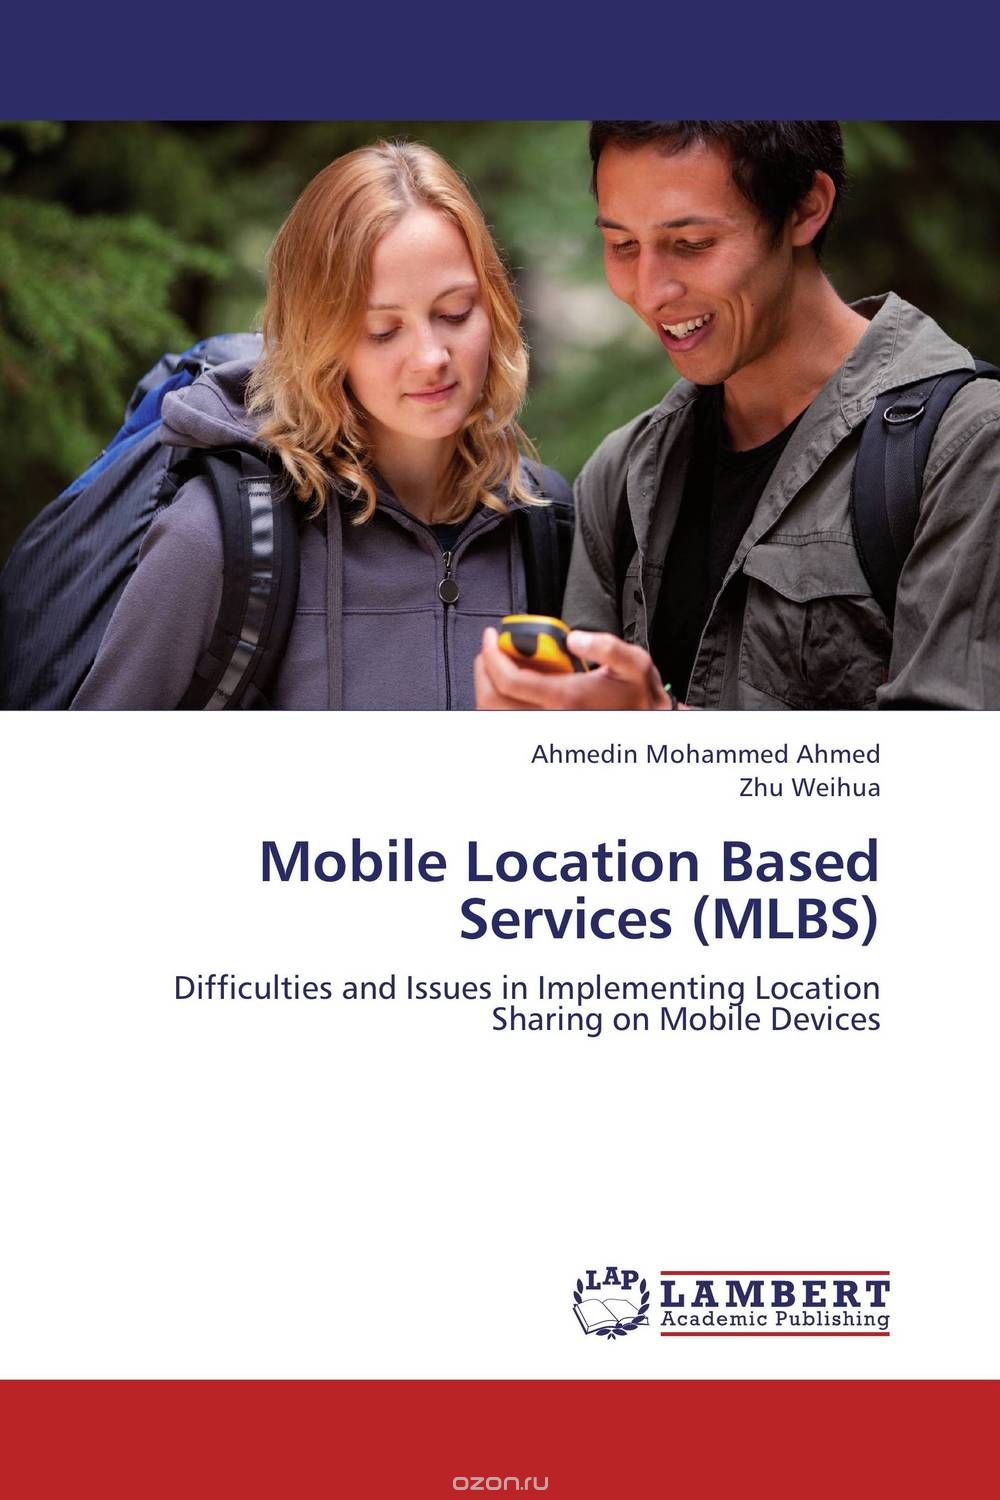 Скачать книгу "Mobile Location Based Services (MLBS)"